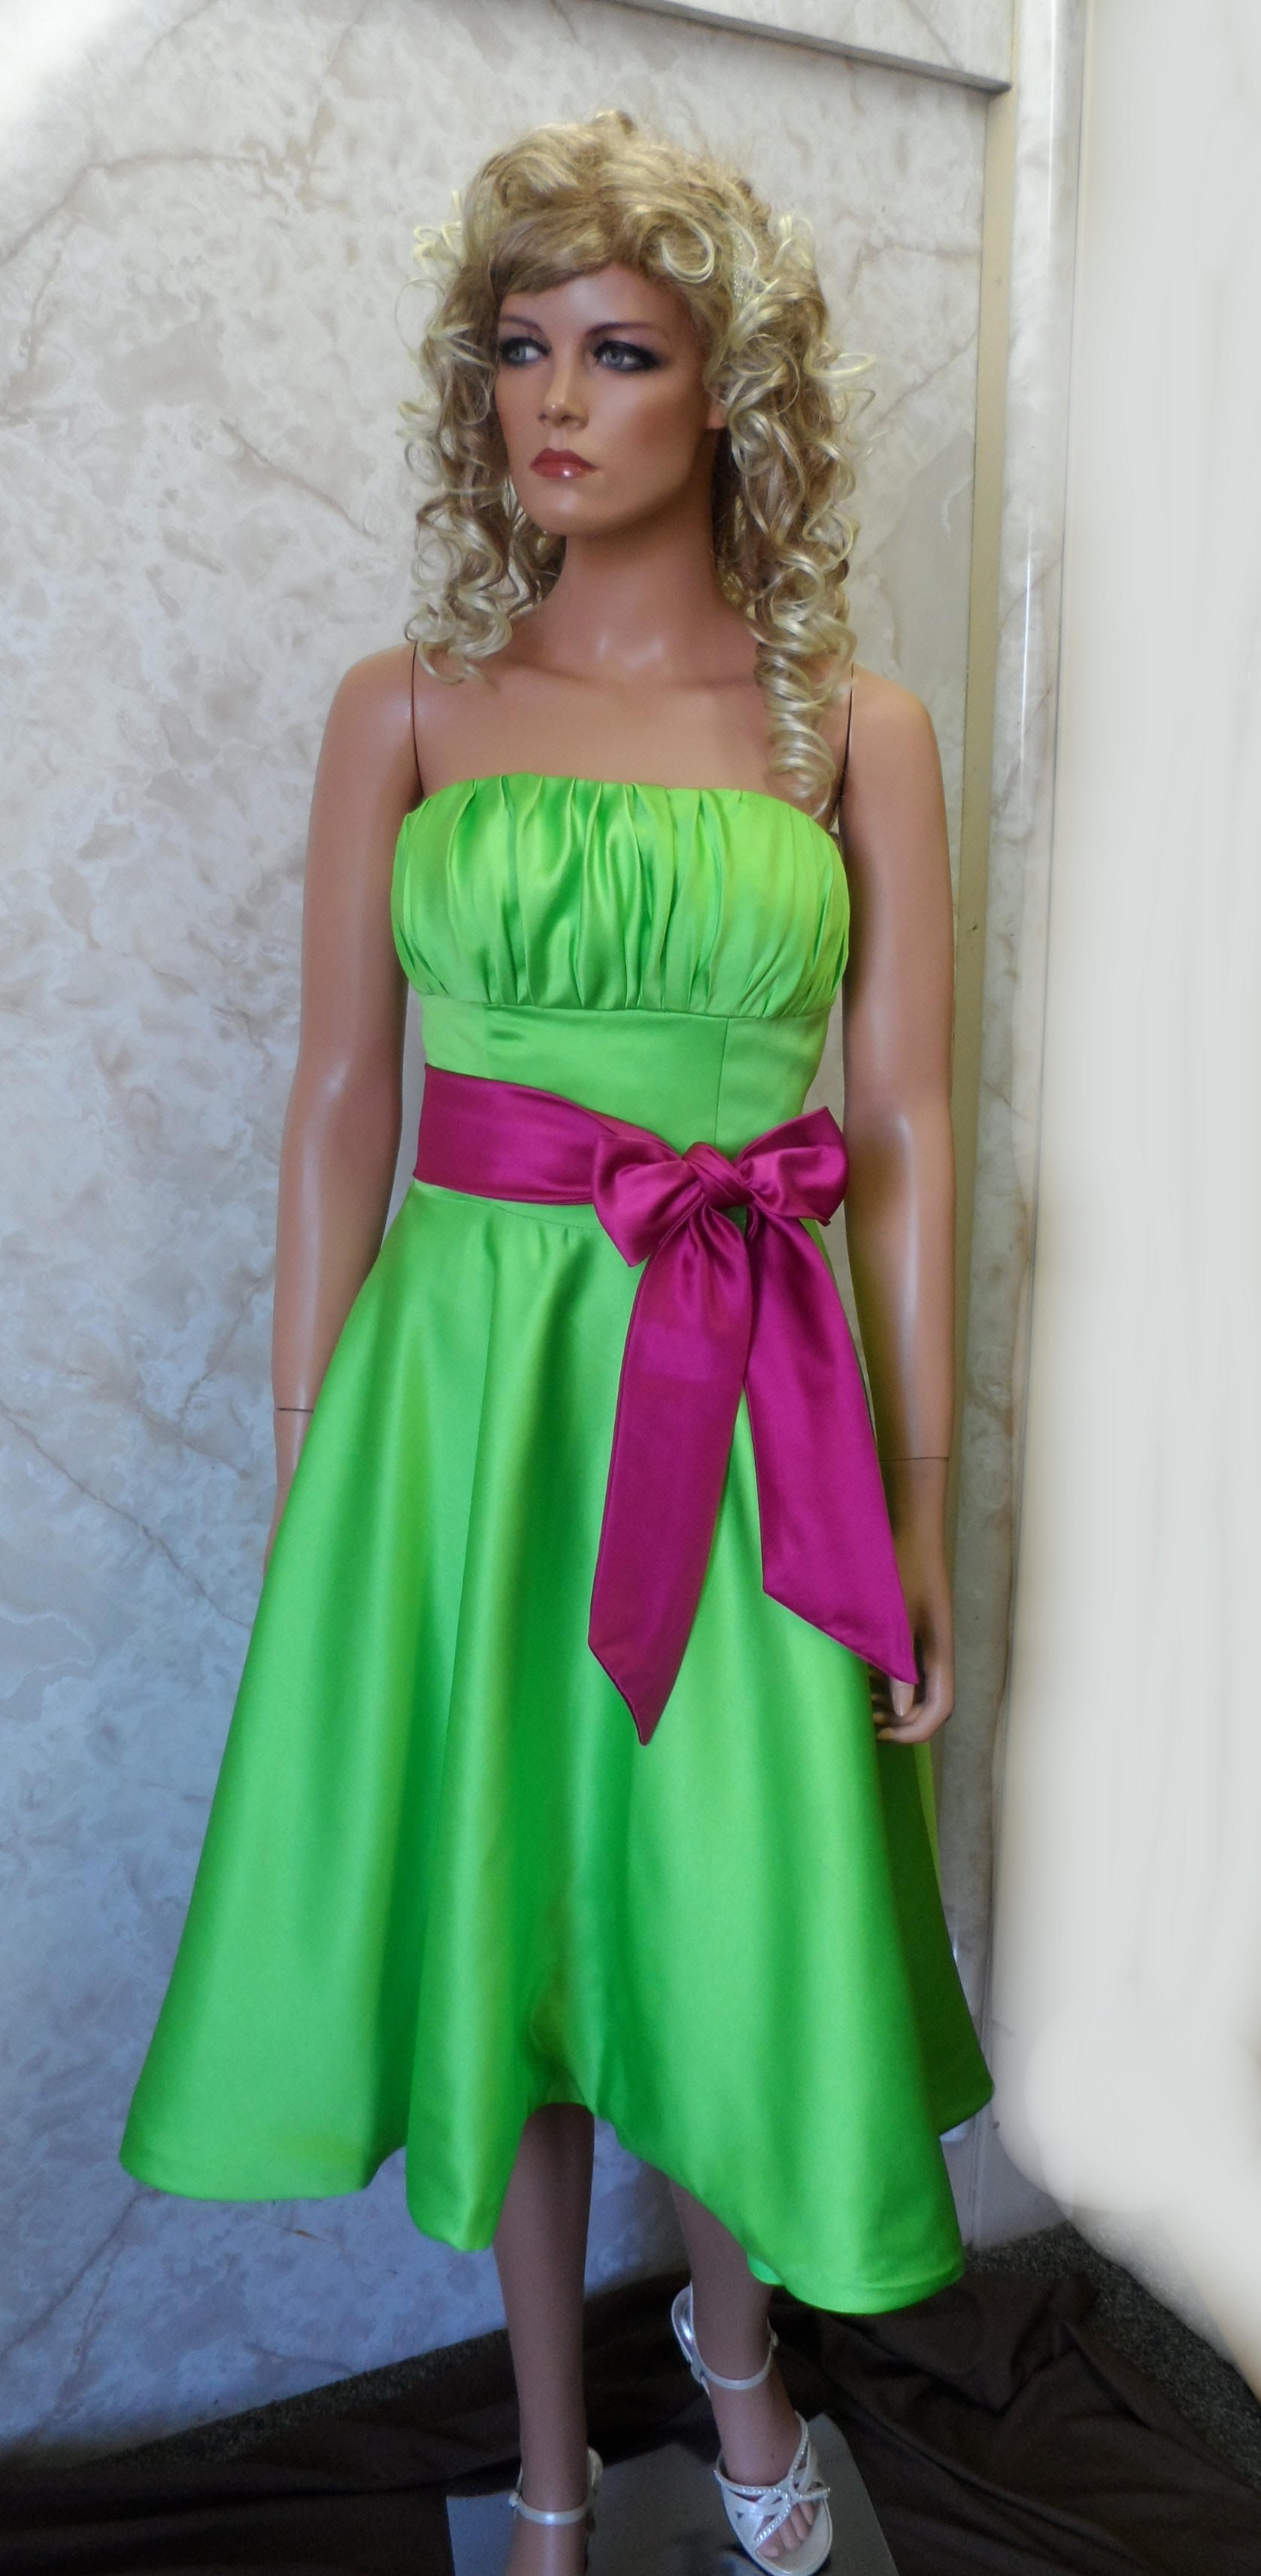 Lime green strapless dress with fuschia sash